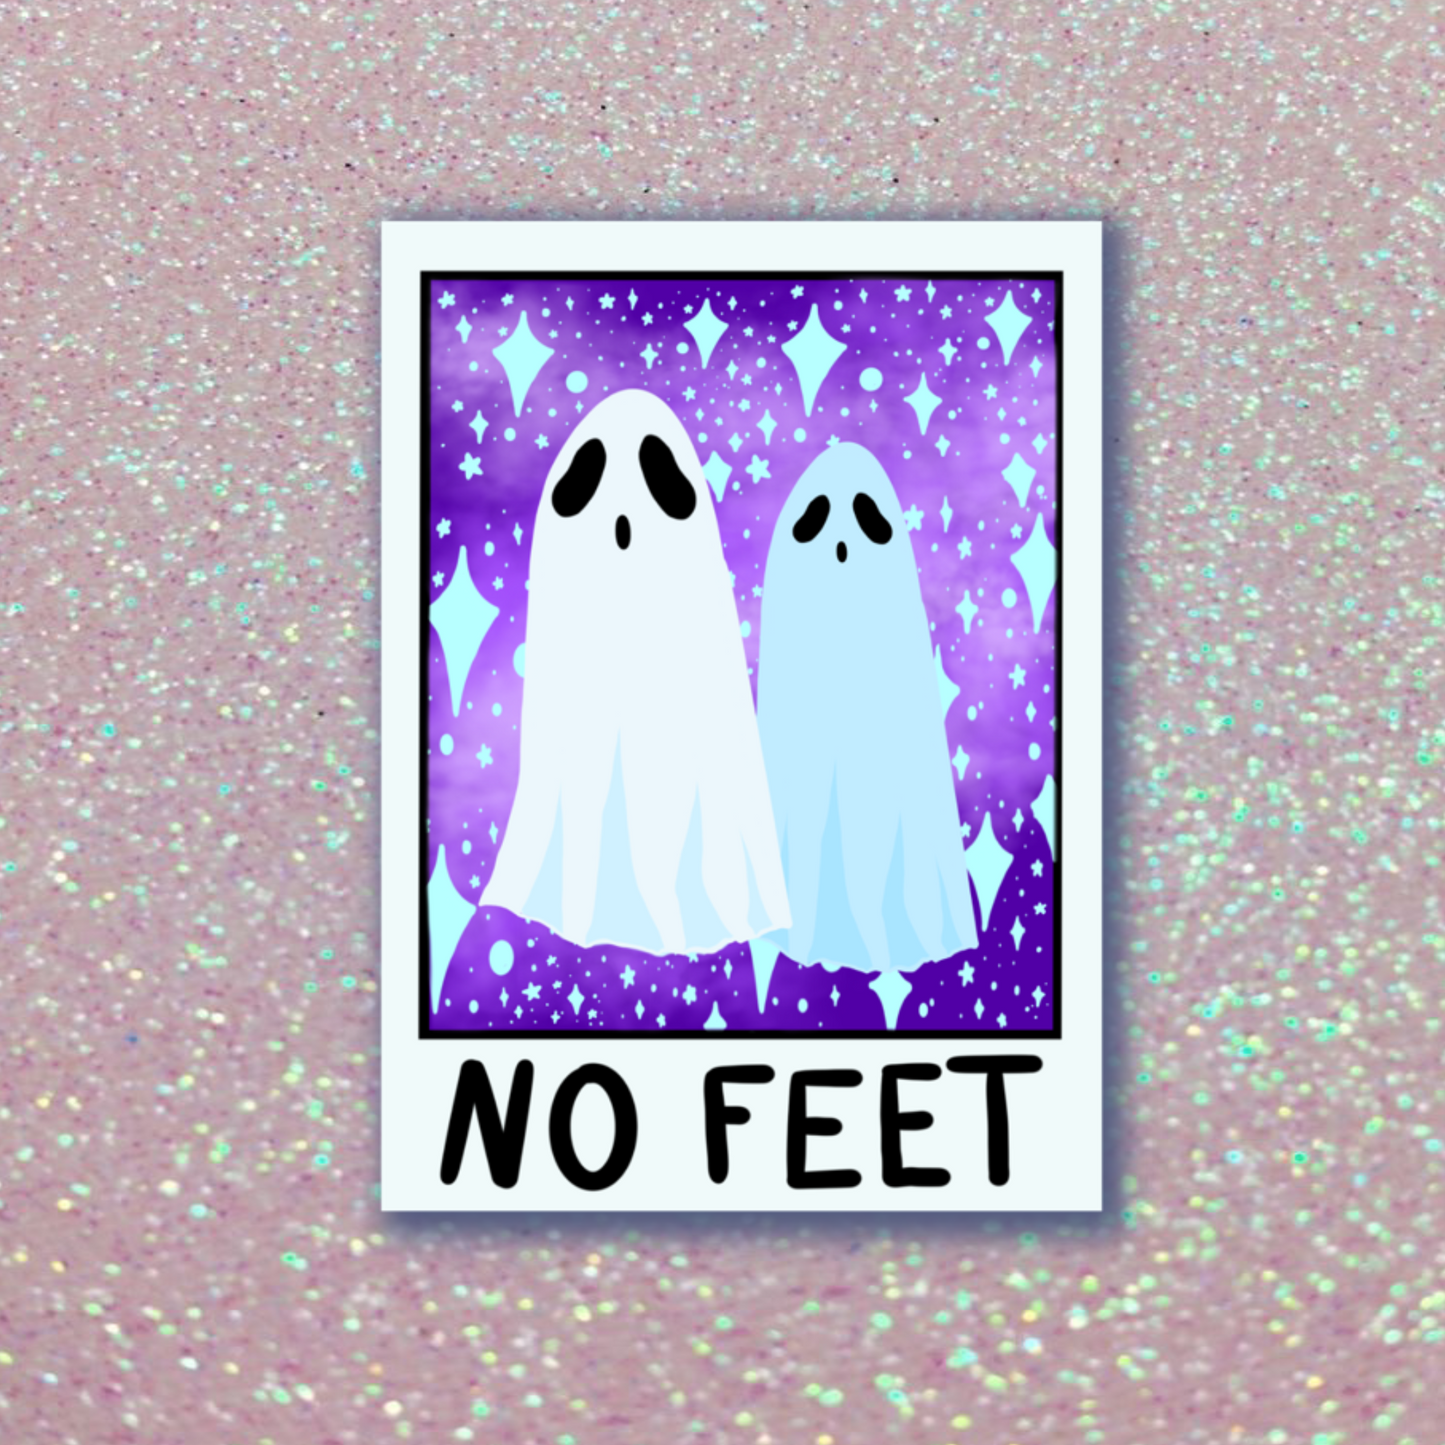 No feet Polaroid inspired sticker